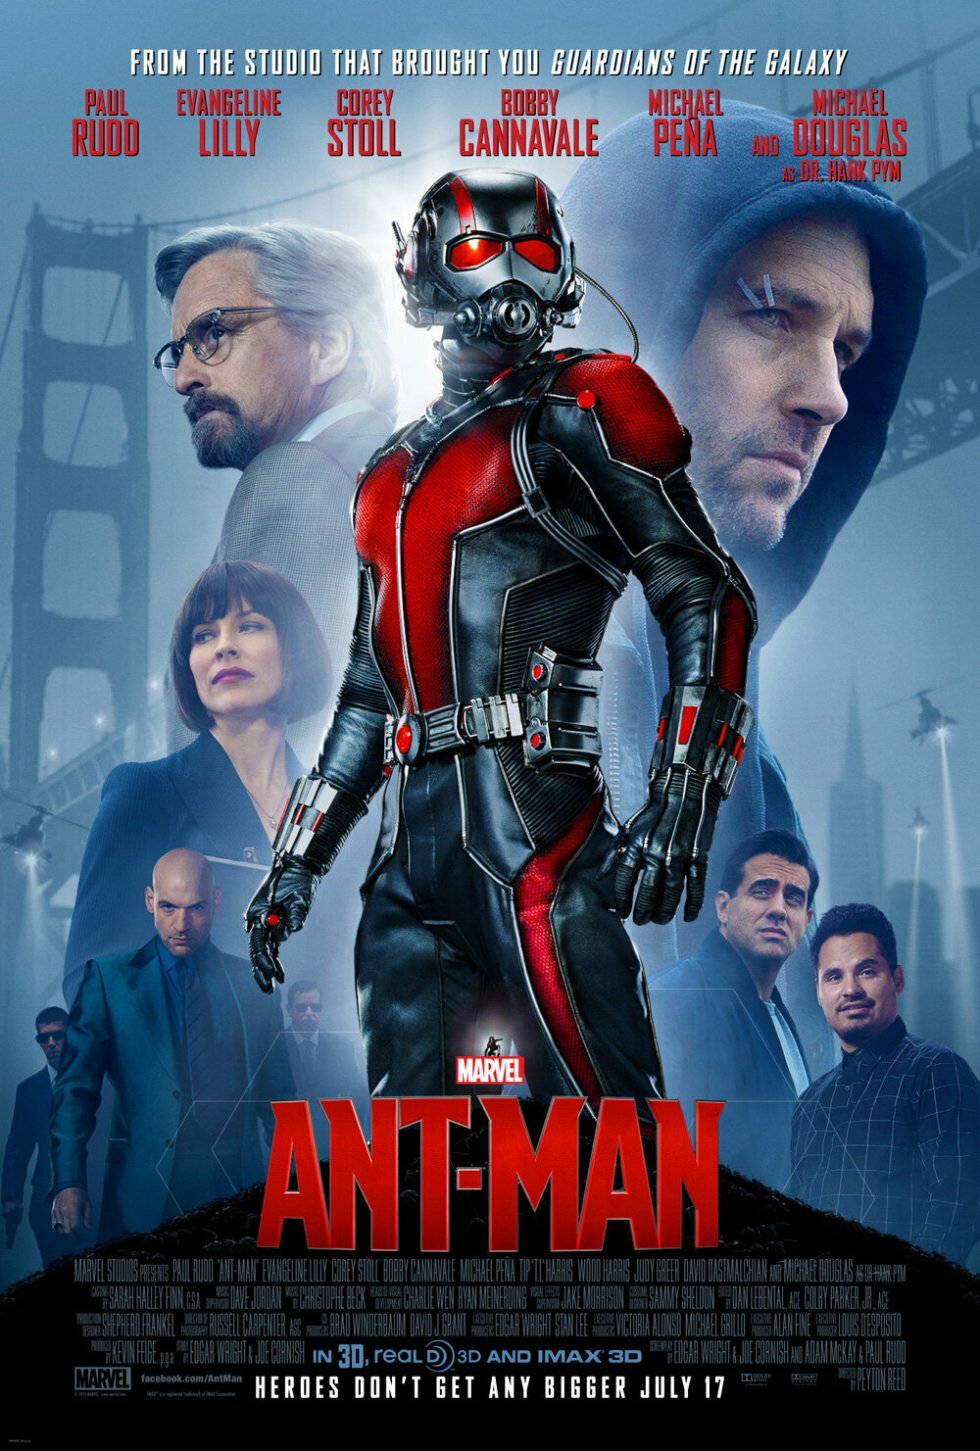 Ant-Man - Marvel Studios - 71 timers film-maraton: I denne rækkefølge skal du se Marvel filmene